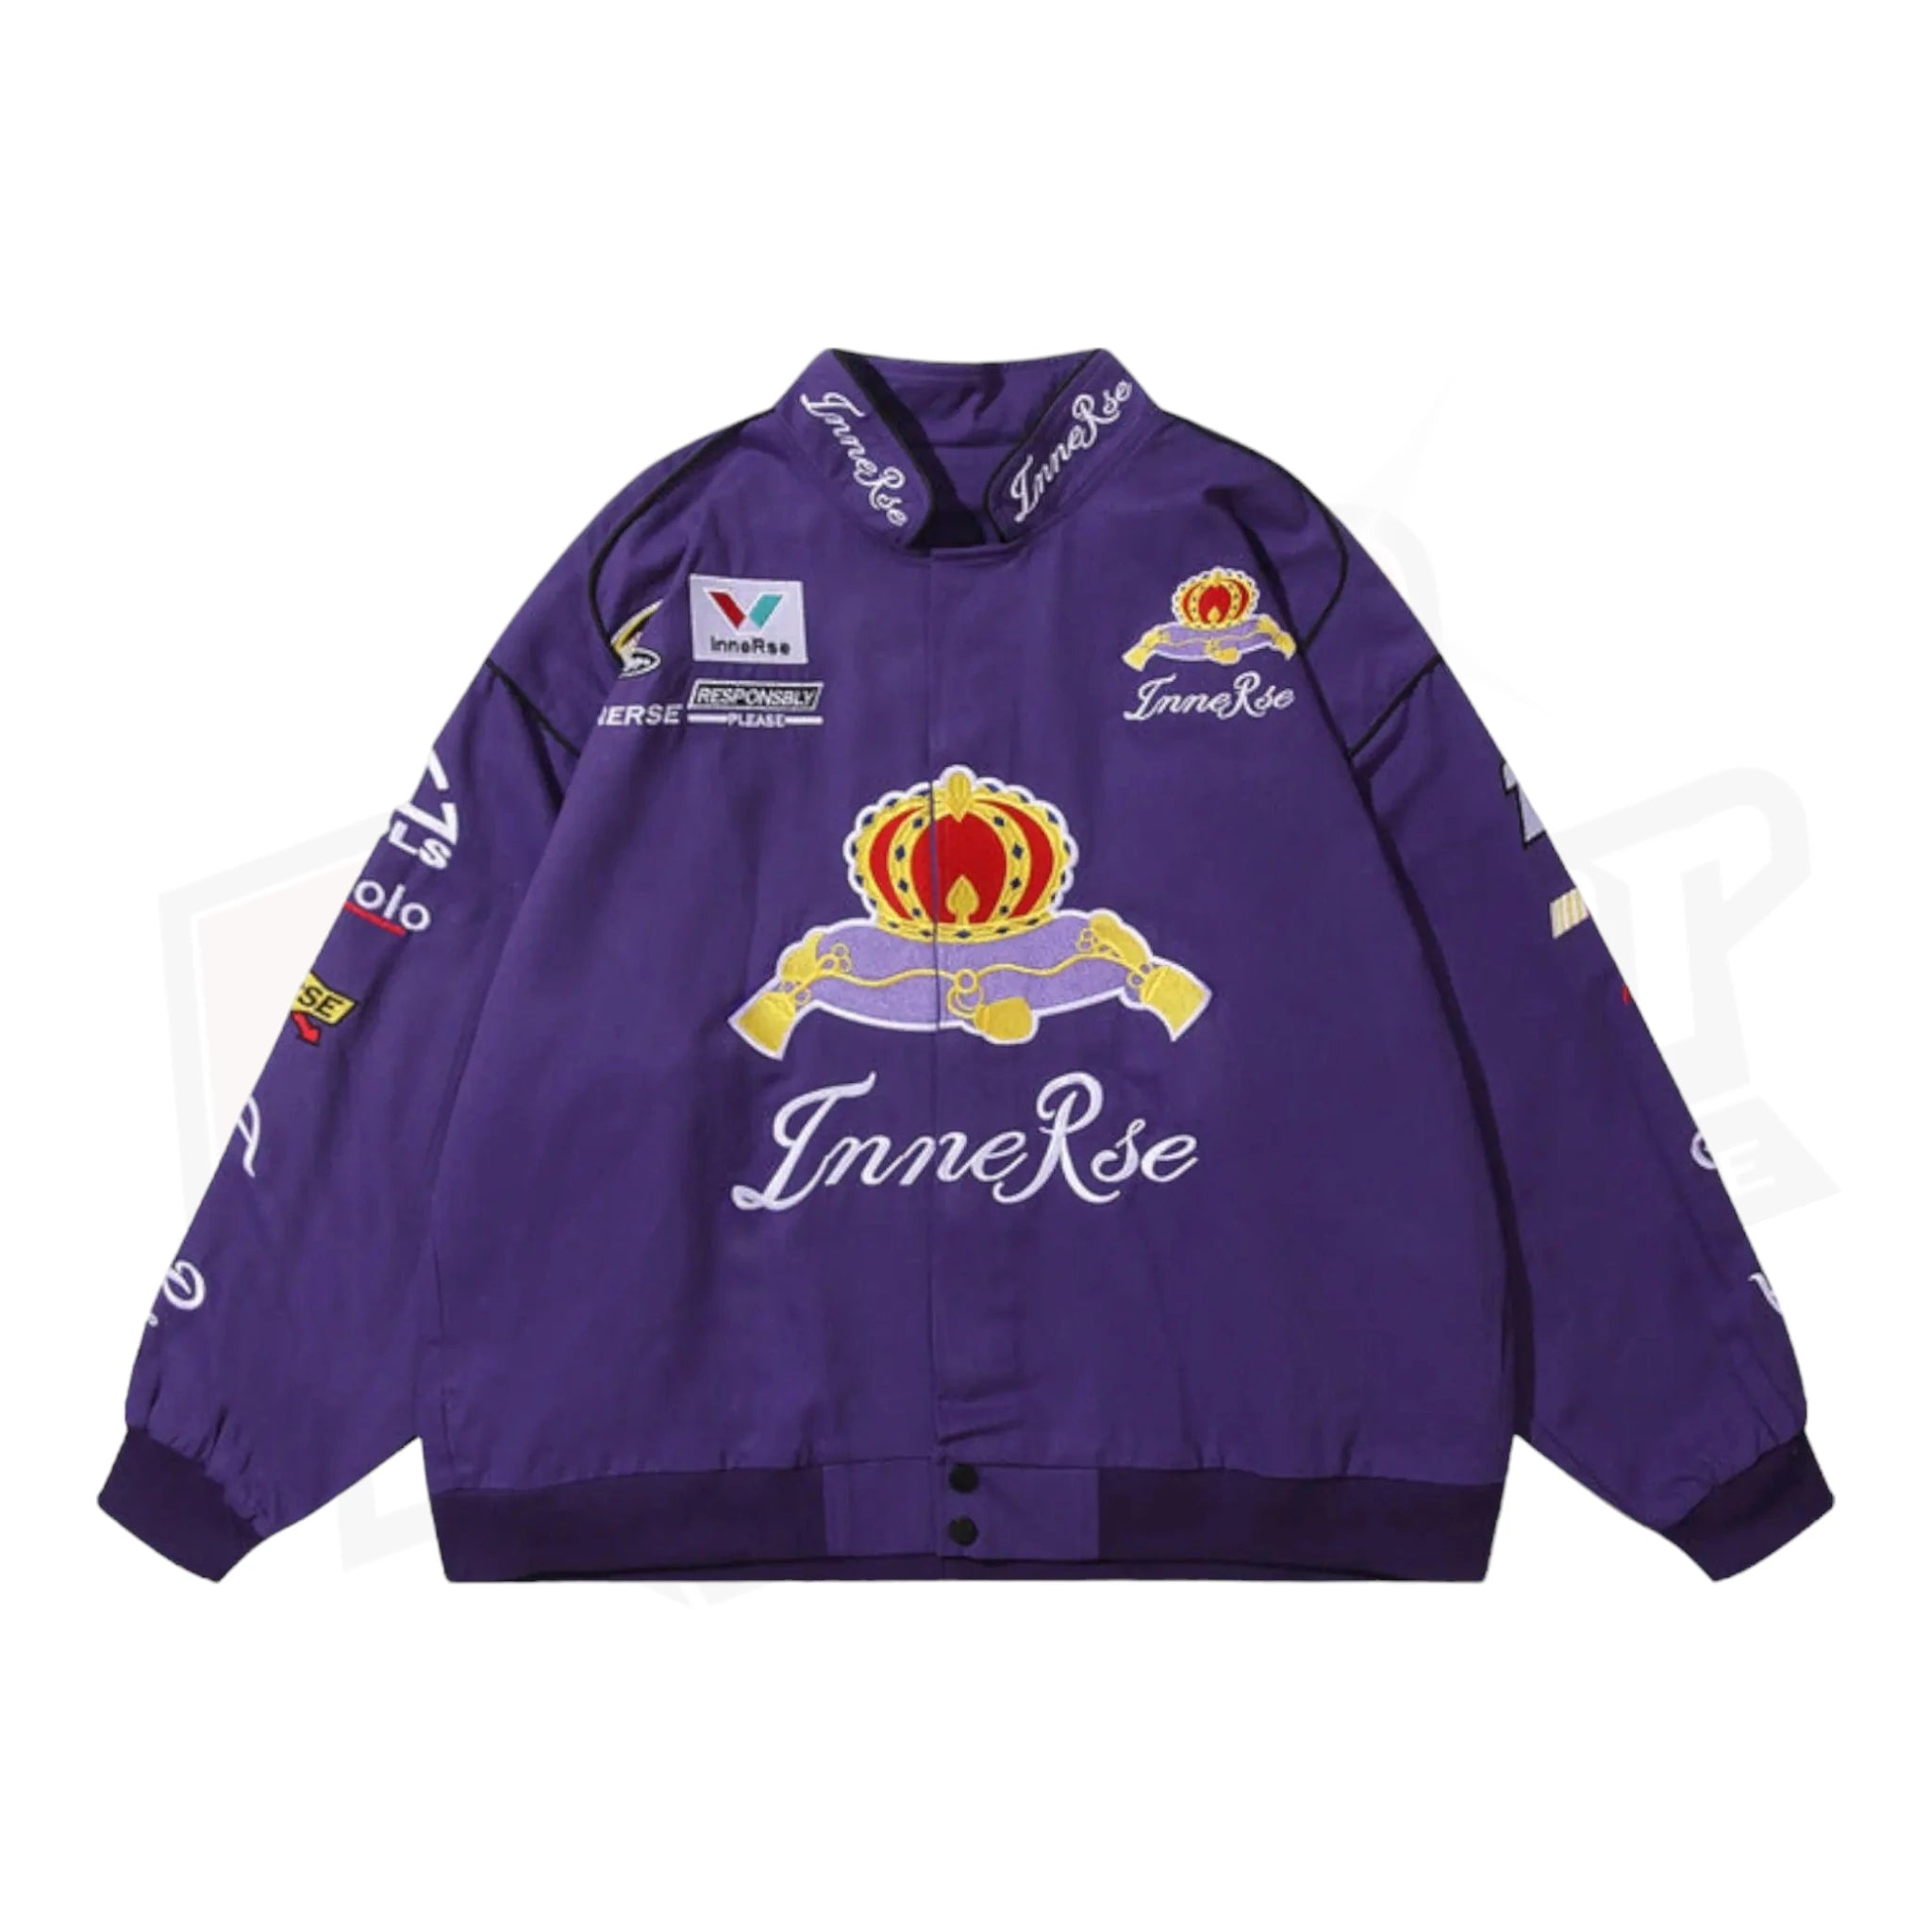 Innerse Nascar Racing Embroidered Jacket Dash Racegear